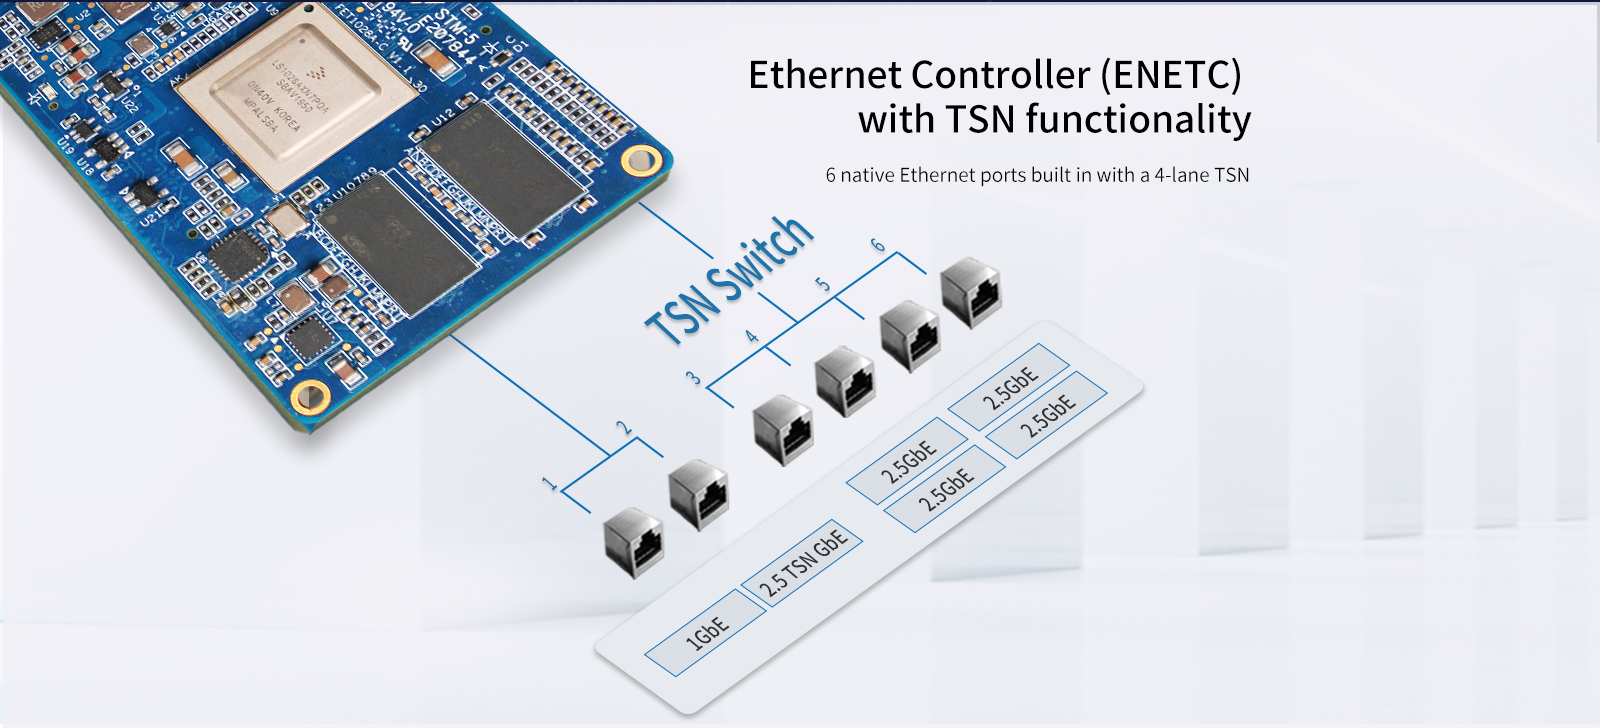 LS1028 Ethernet can support TSN